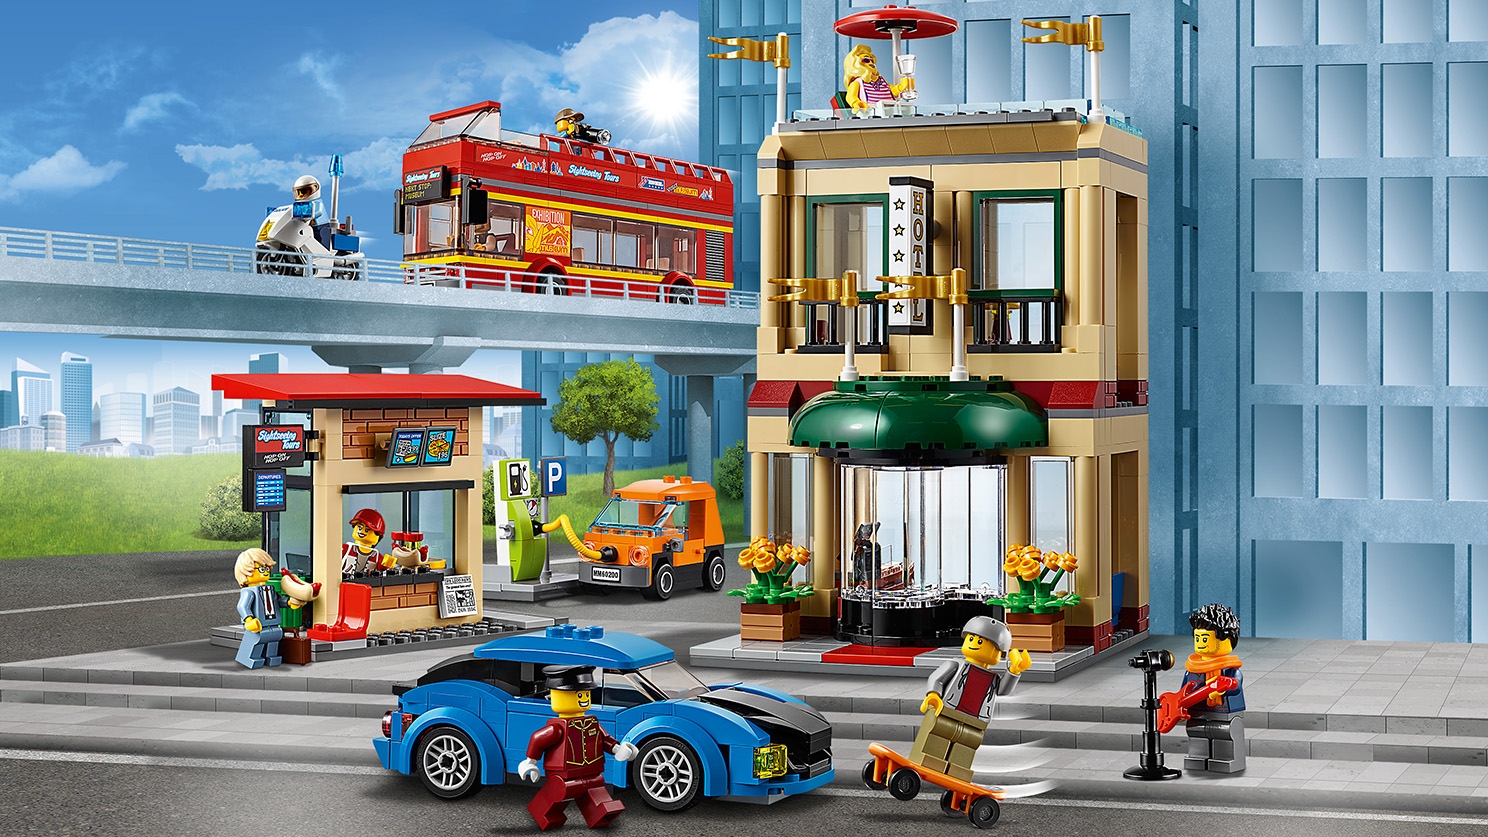 Gran capital 60200 - LEGO® City para niños